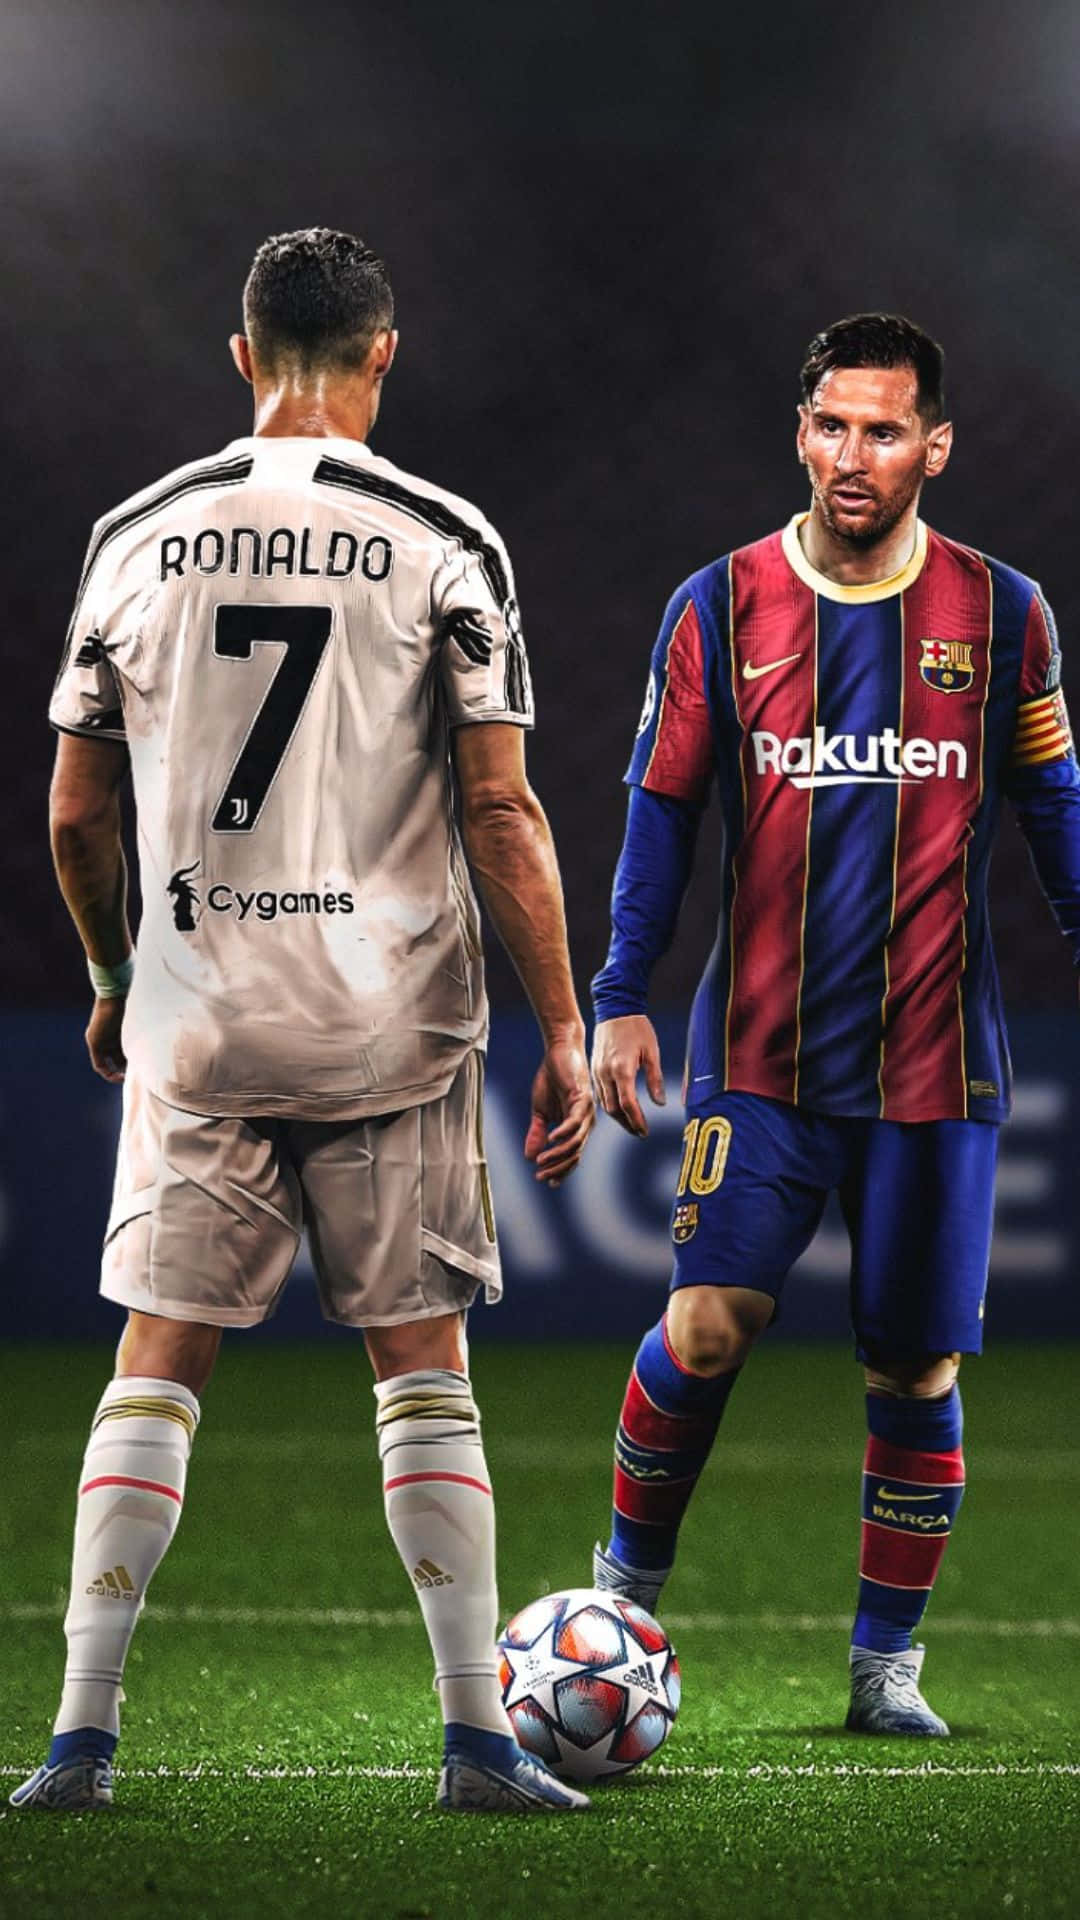 Download Ronaldoand Messi Football Legends Wallpaper | Wallpapers.com